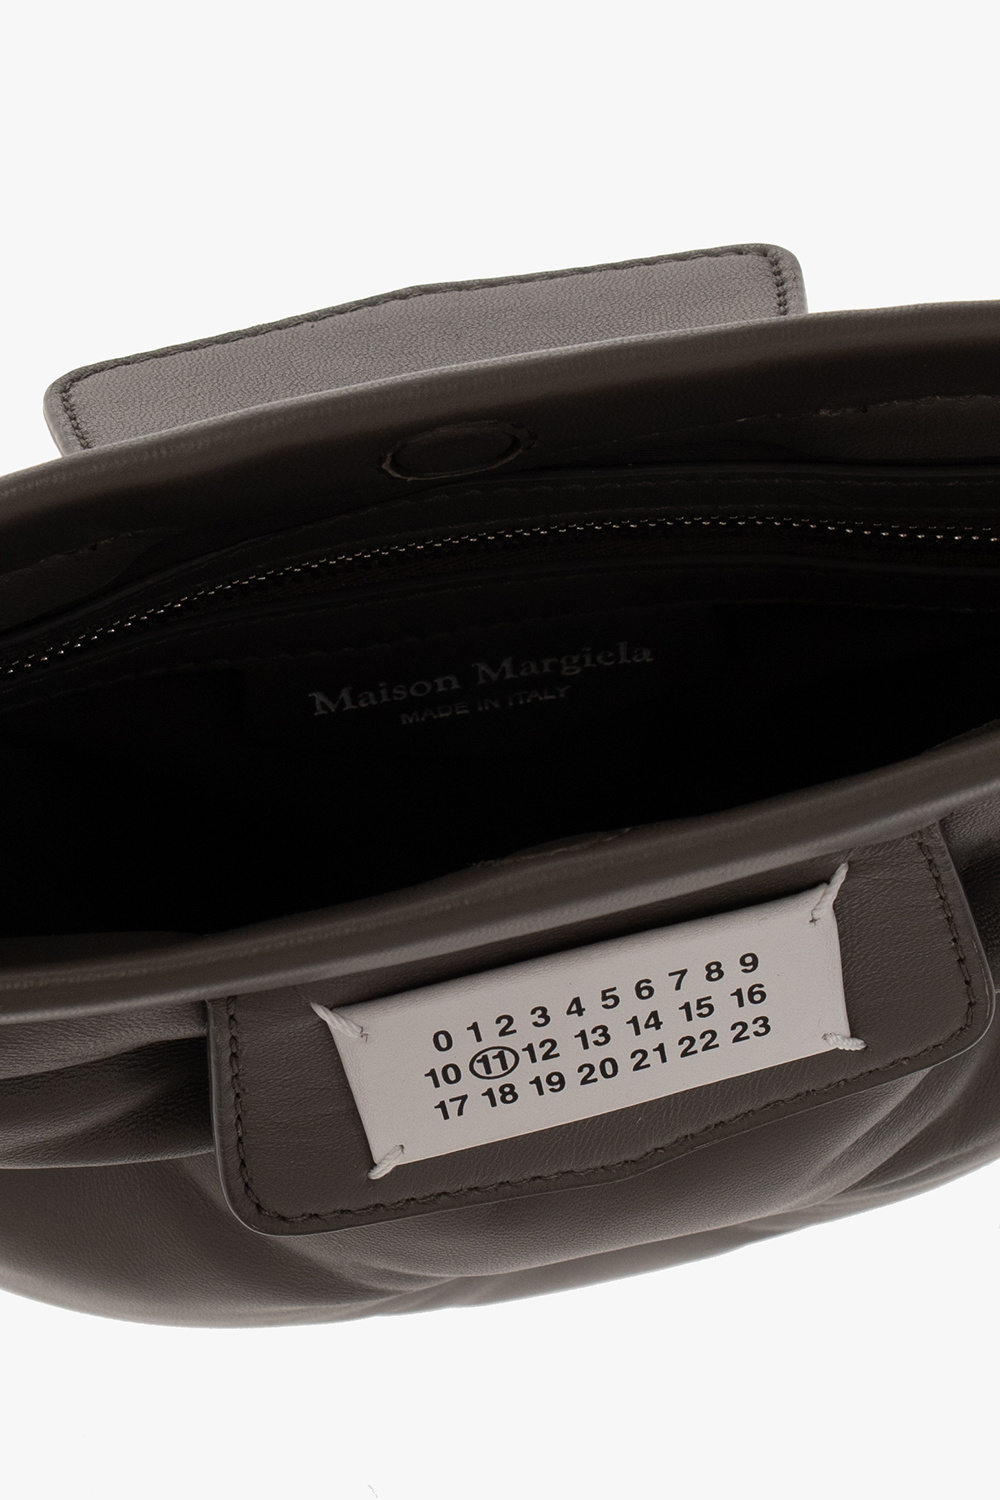 Maison Margiela Mulberry shoulder bag